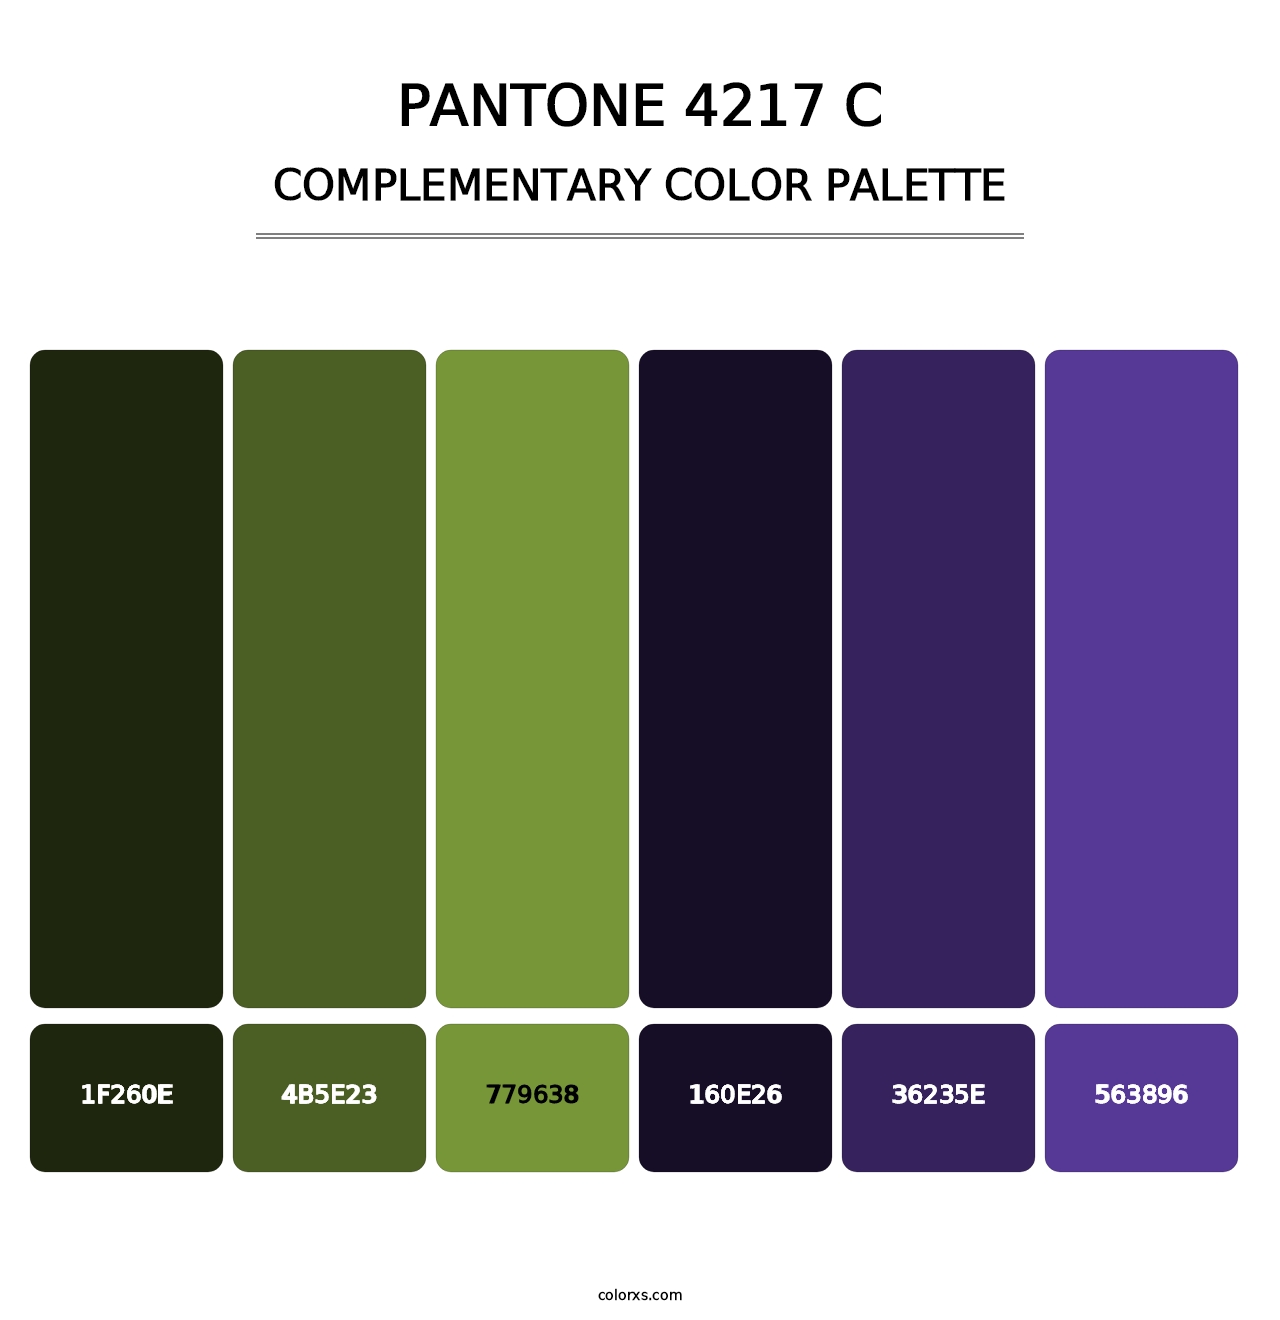 PANTONE 4217 C - Complementary Color Palette